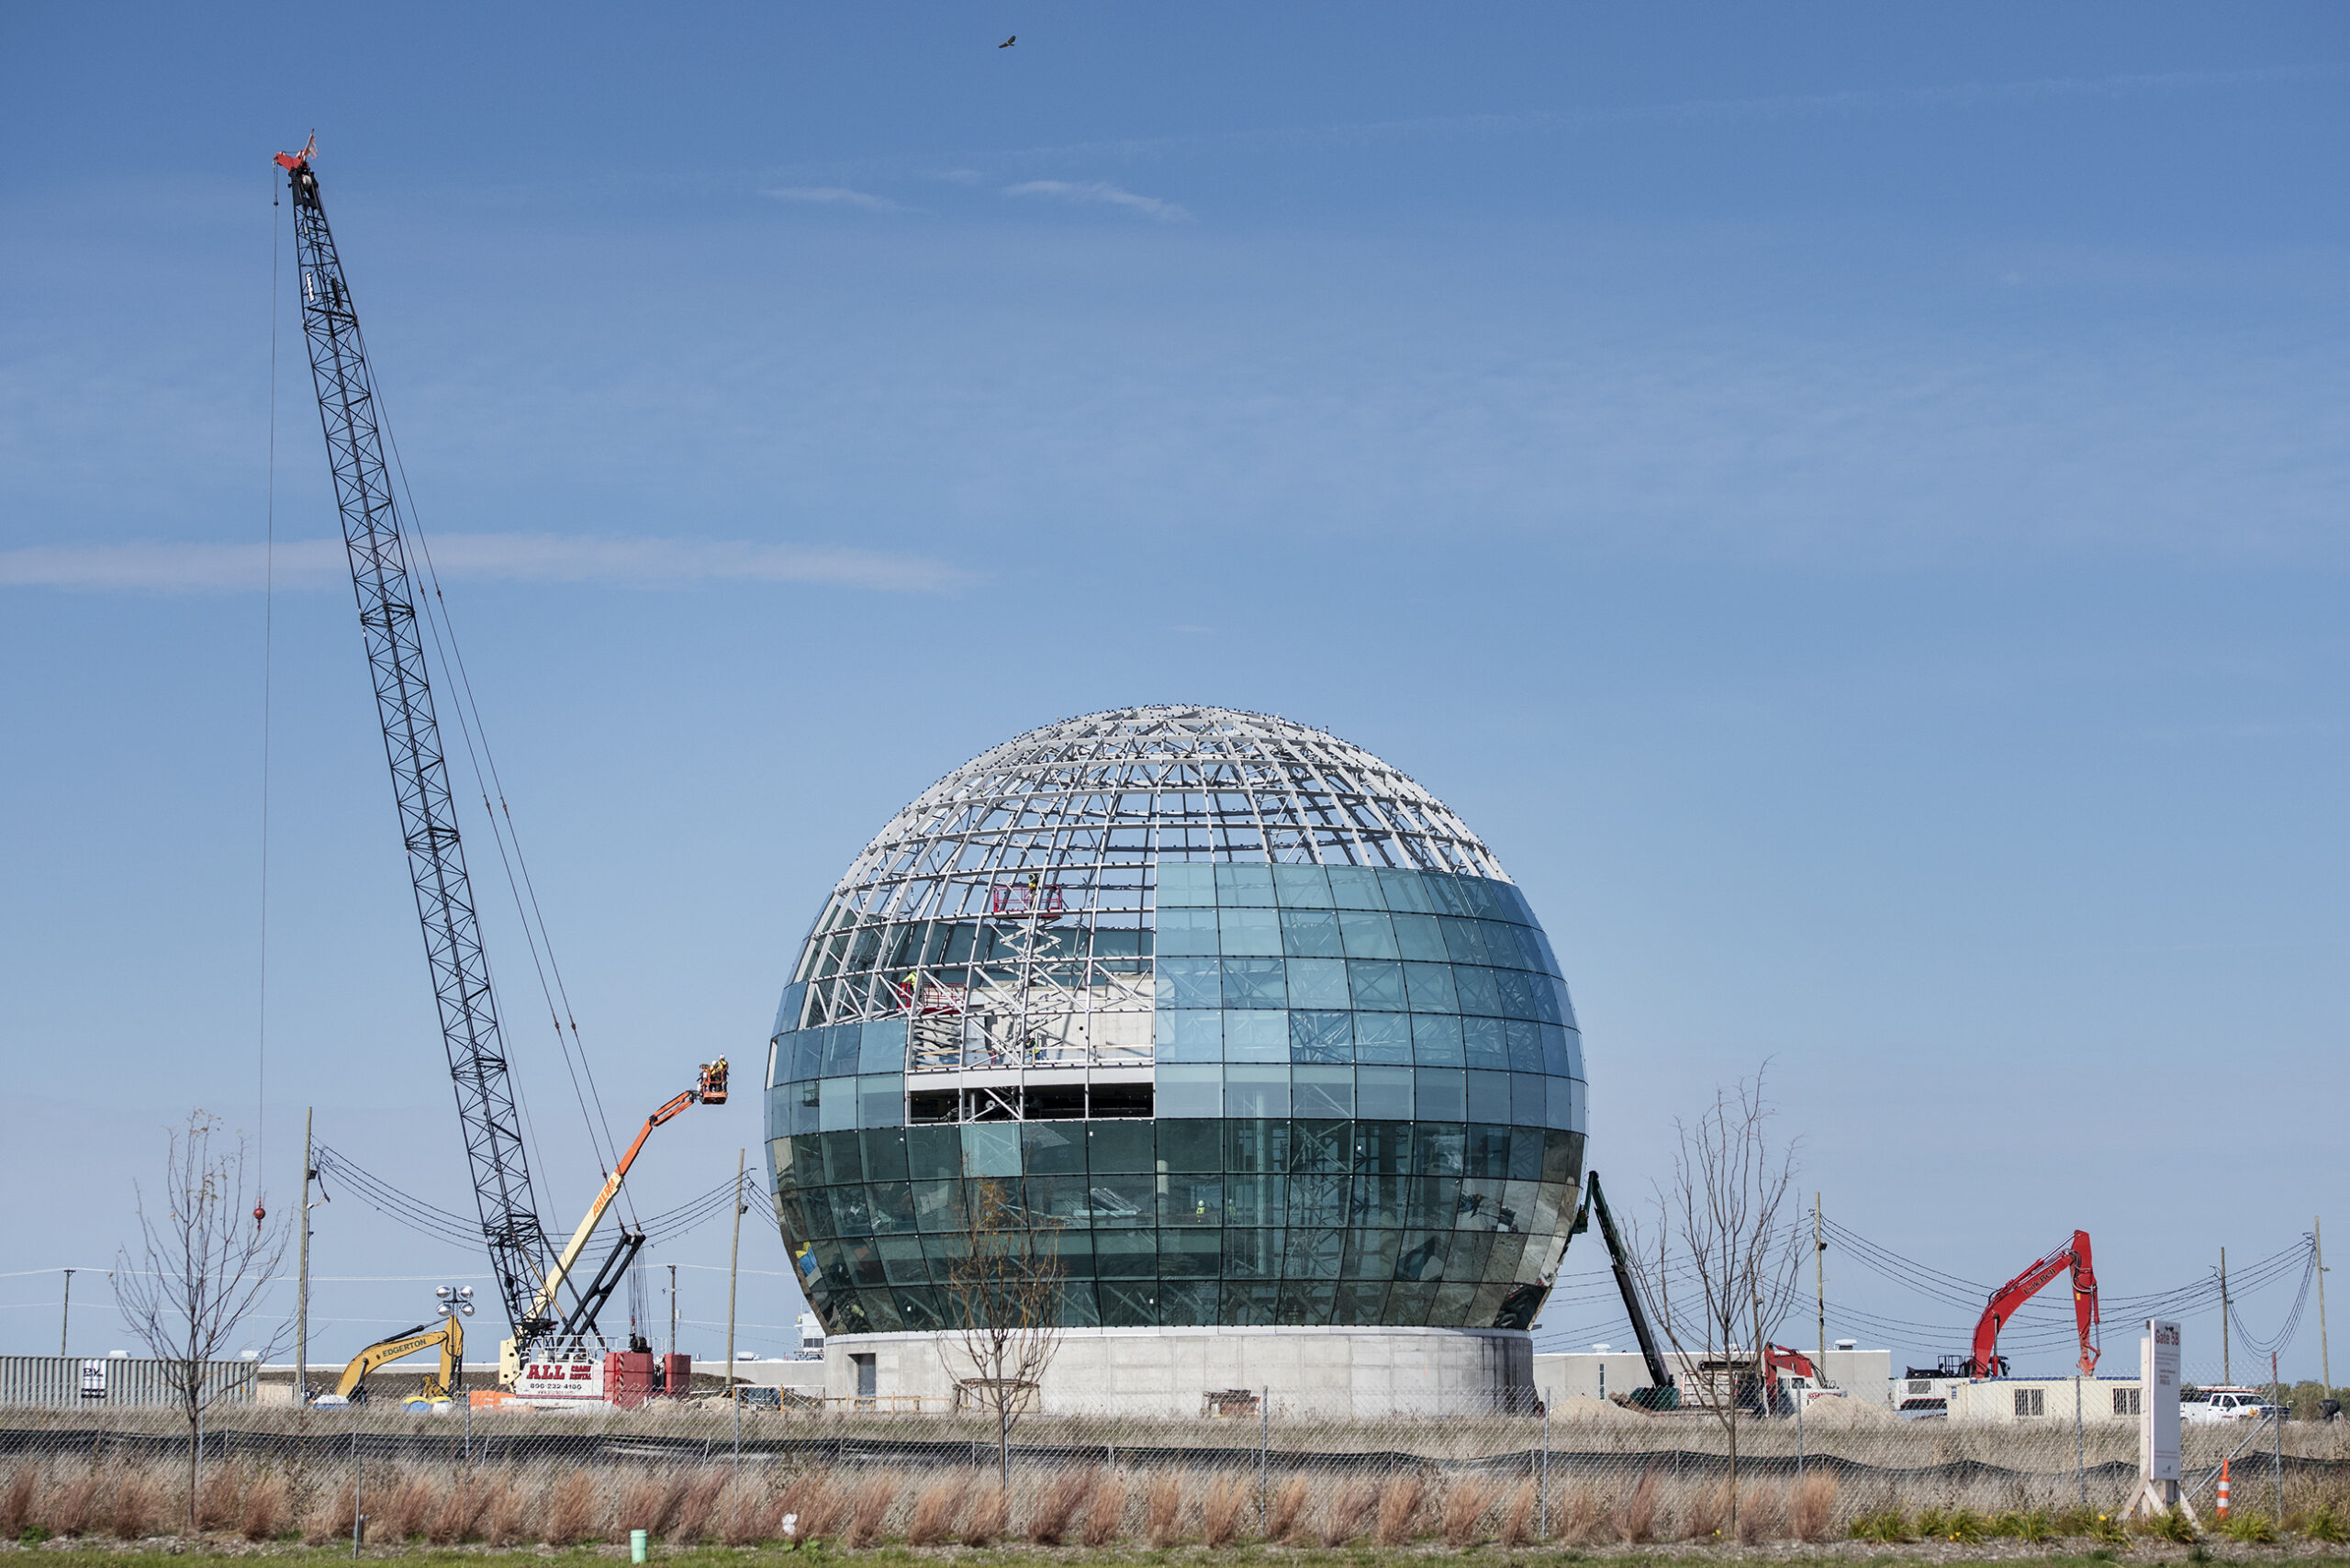 Cranes surround a large globe under a blue sky